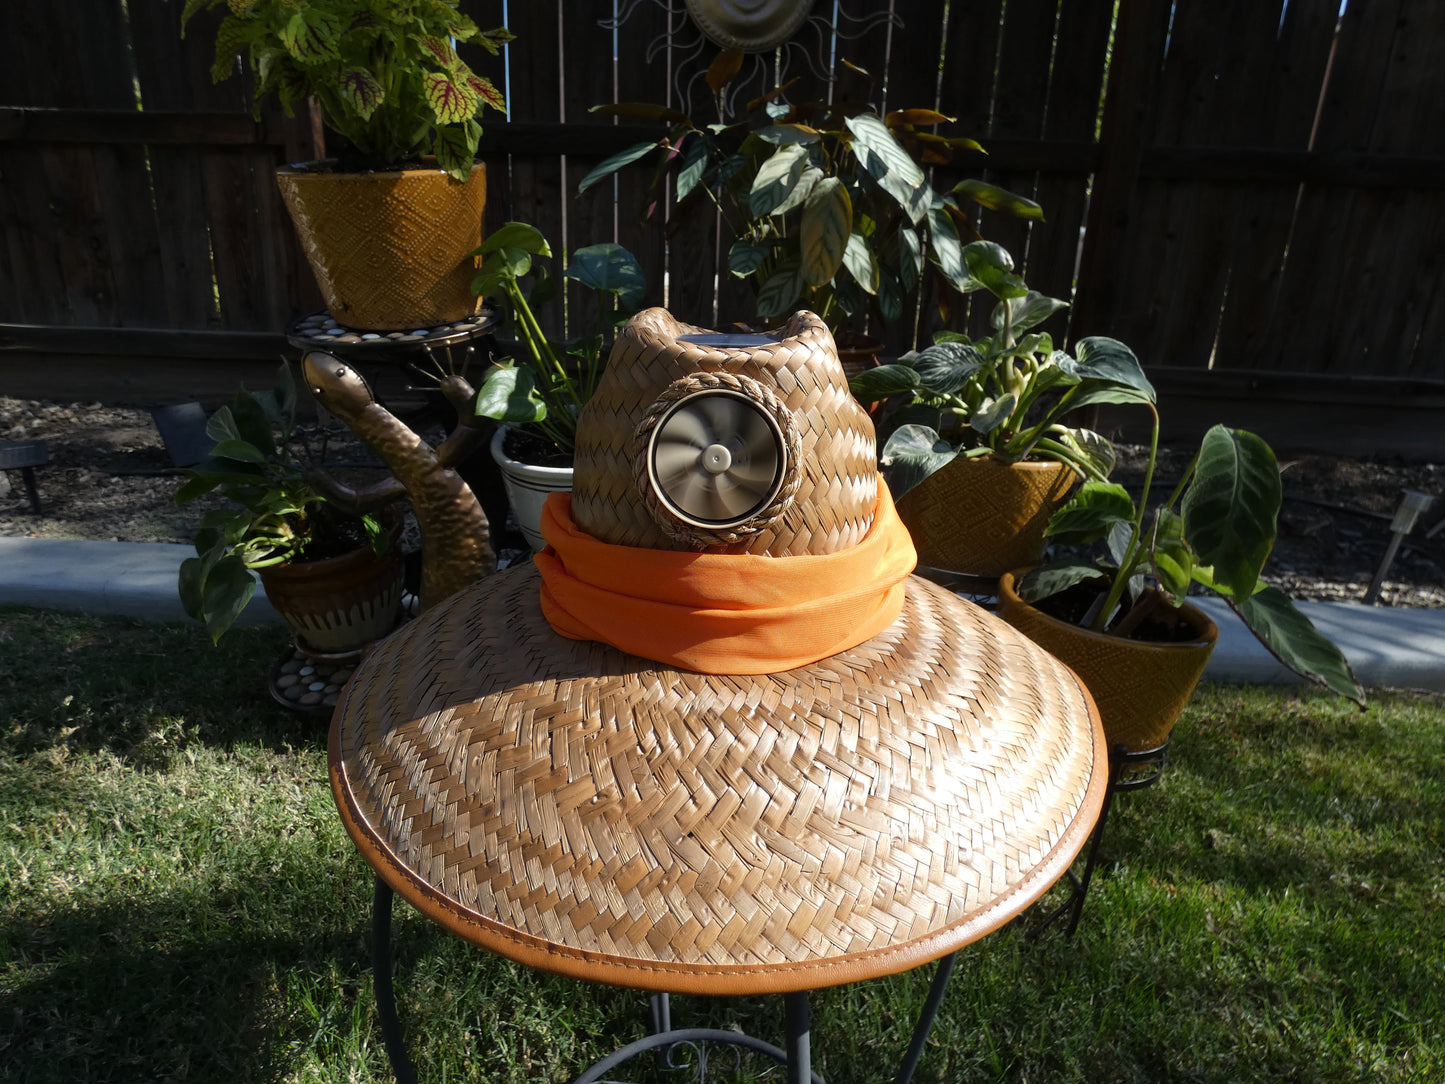 Lady's Thurman with Scarf Solar Hat - Sun Hat with Fan, Medium